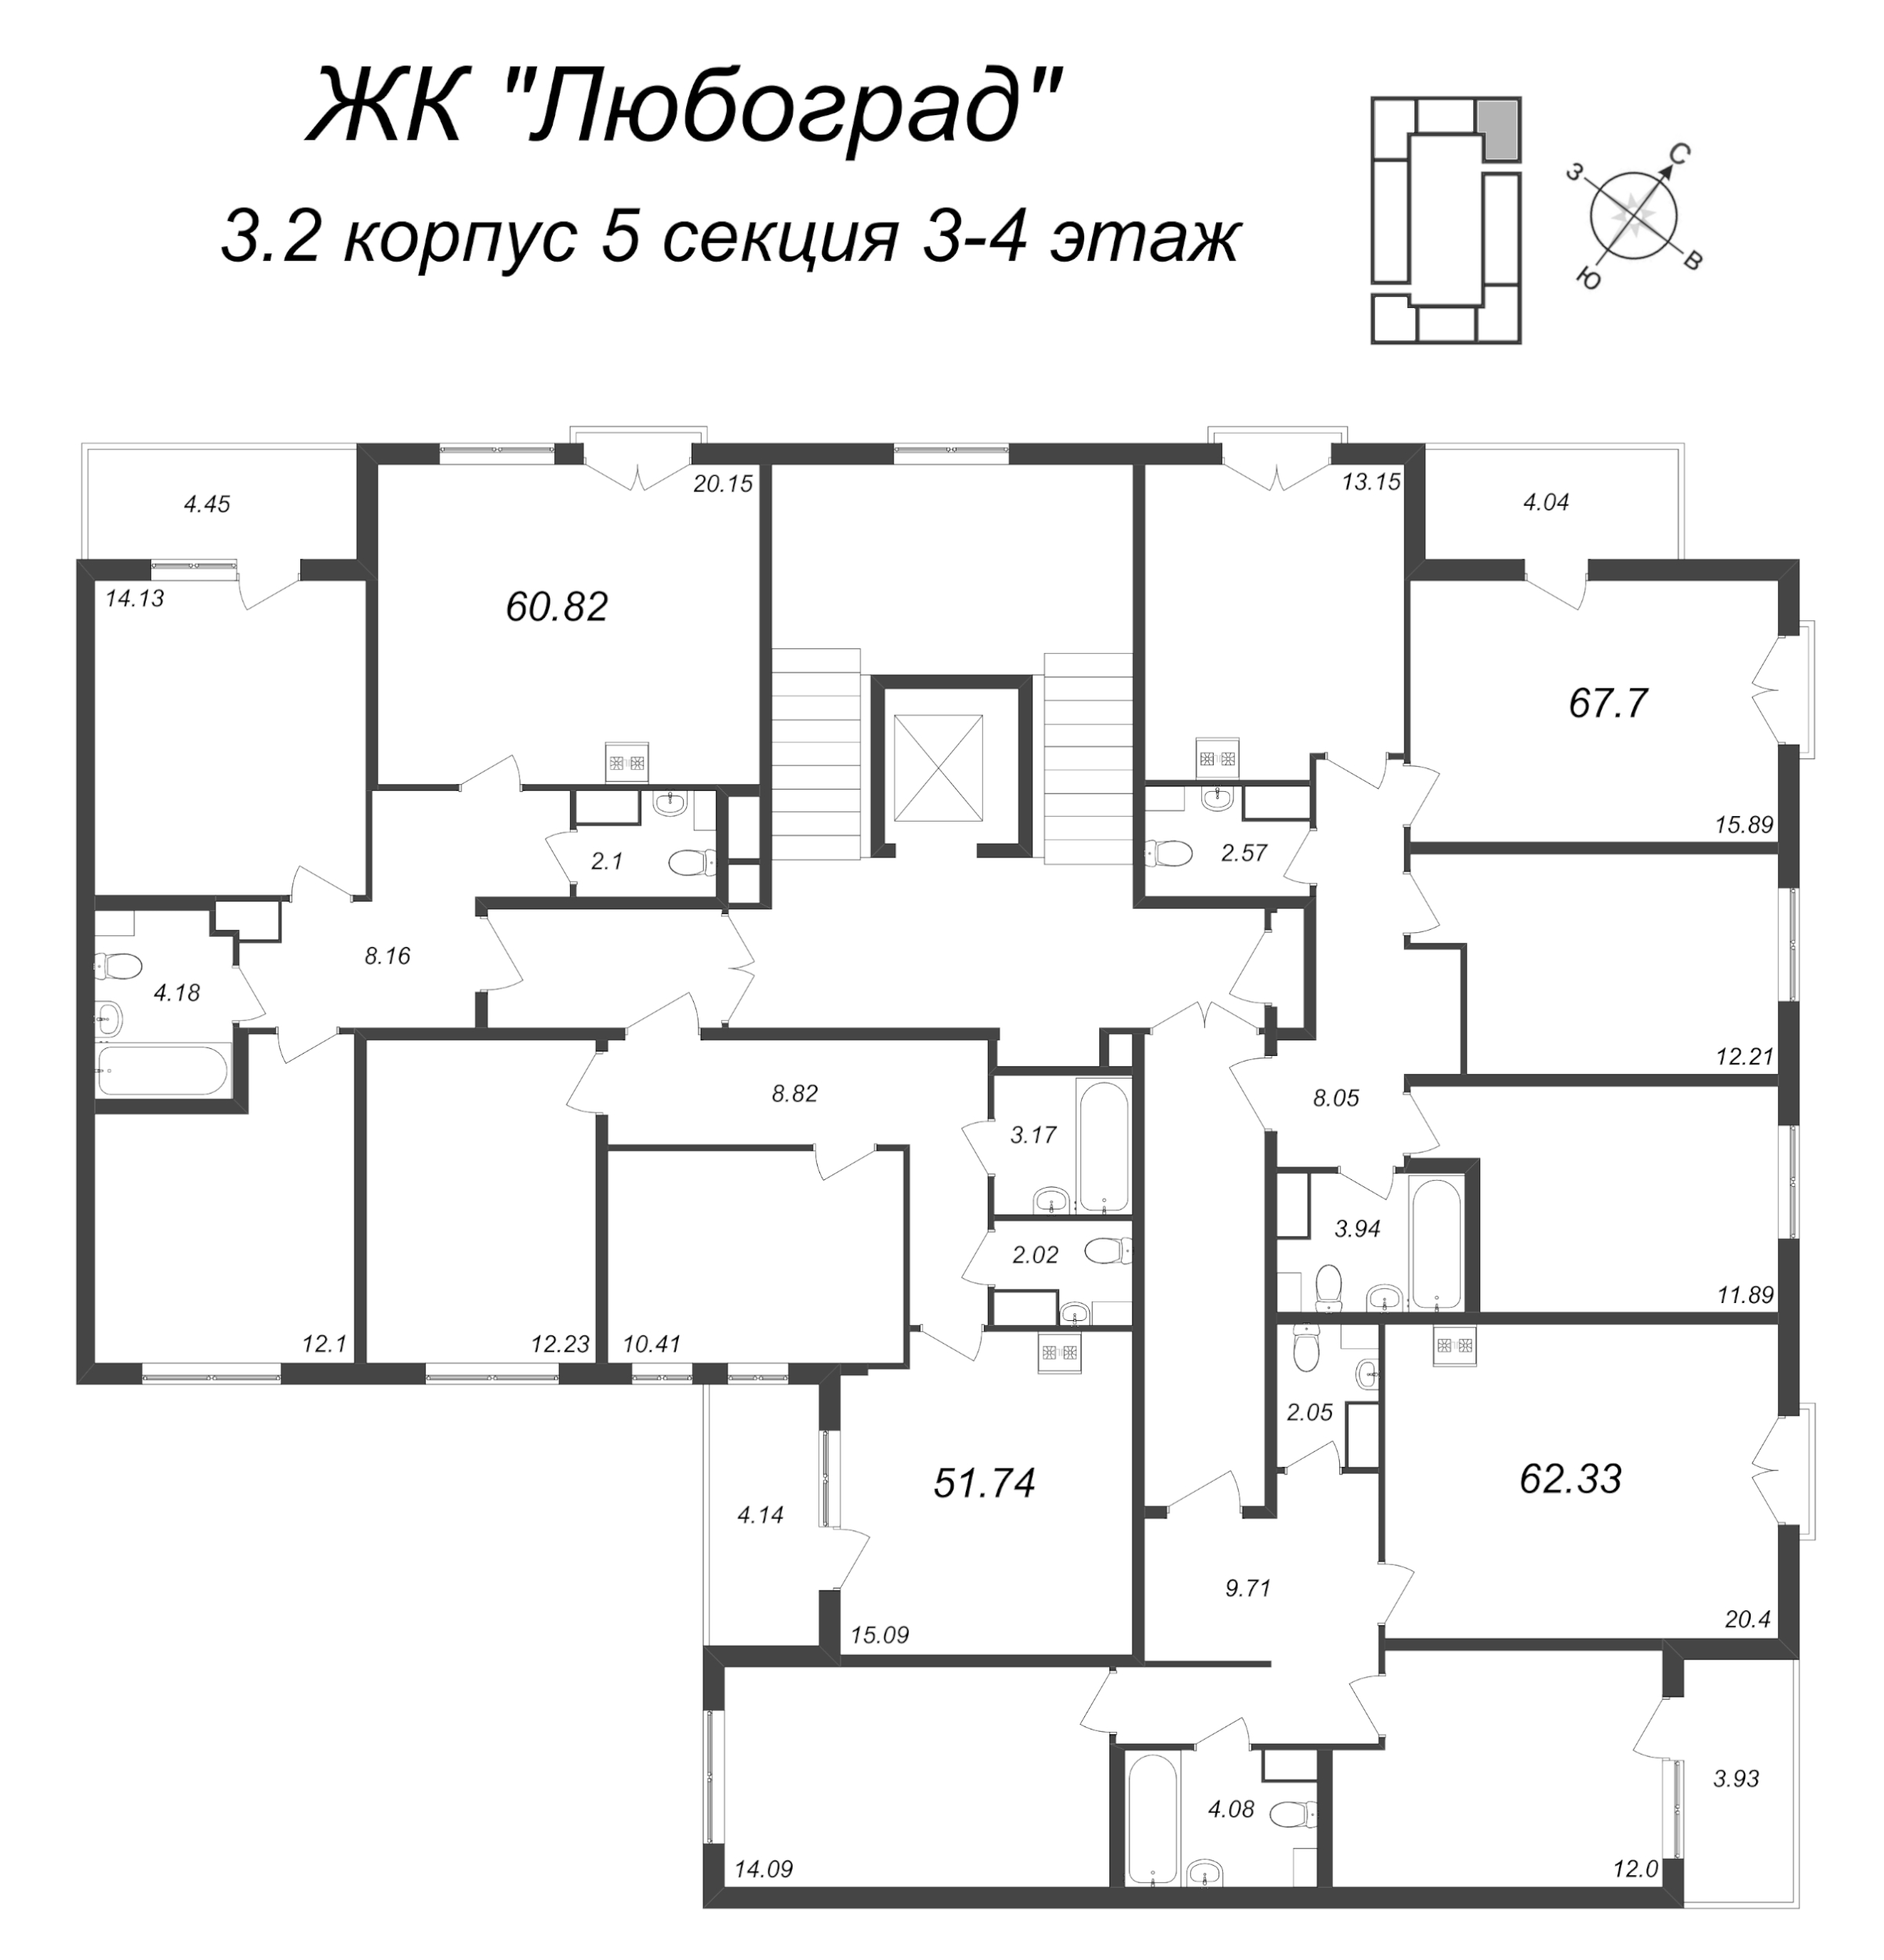 3-комнатная (Евро) квартира, 51.74 м² - планировка этажа